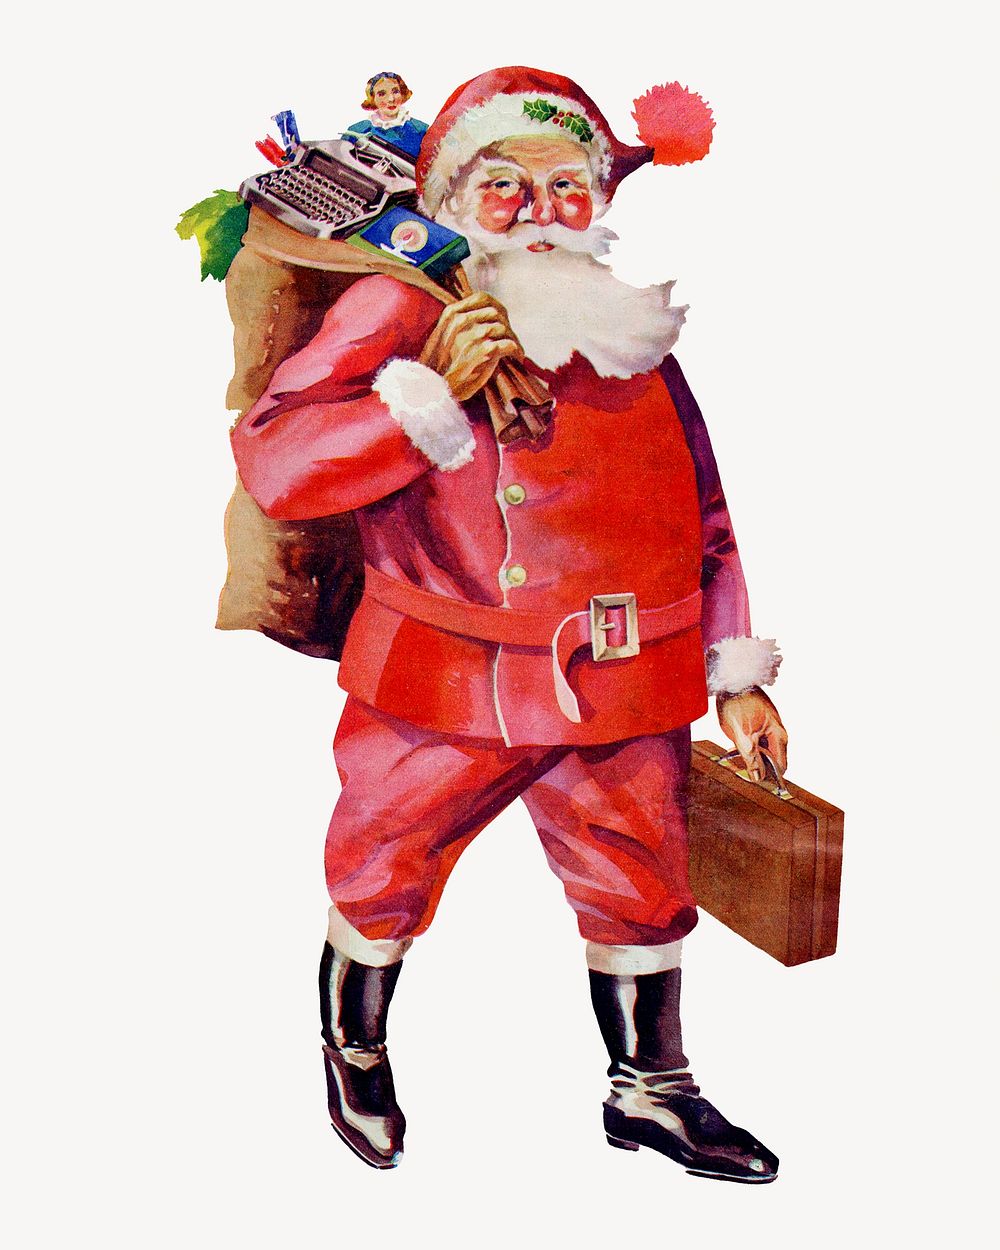 Santa Claus, vintage Christmas illustration. Remixed by rawpixel.